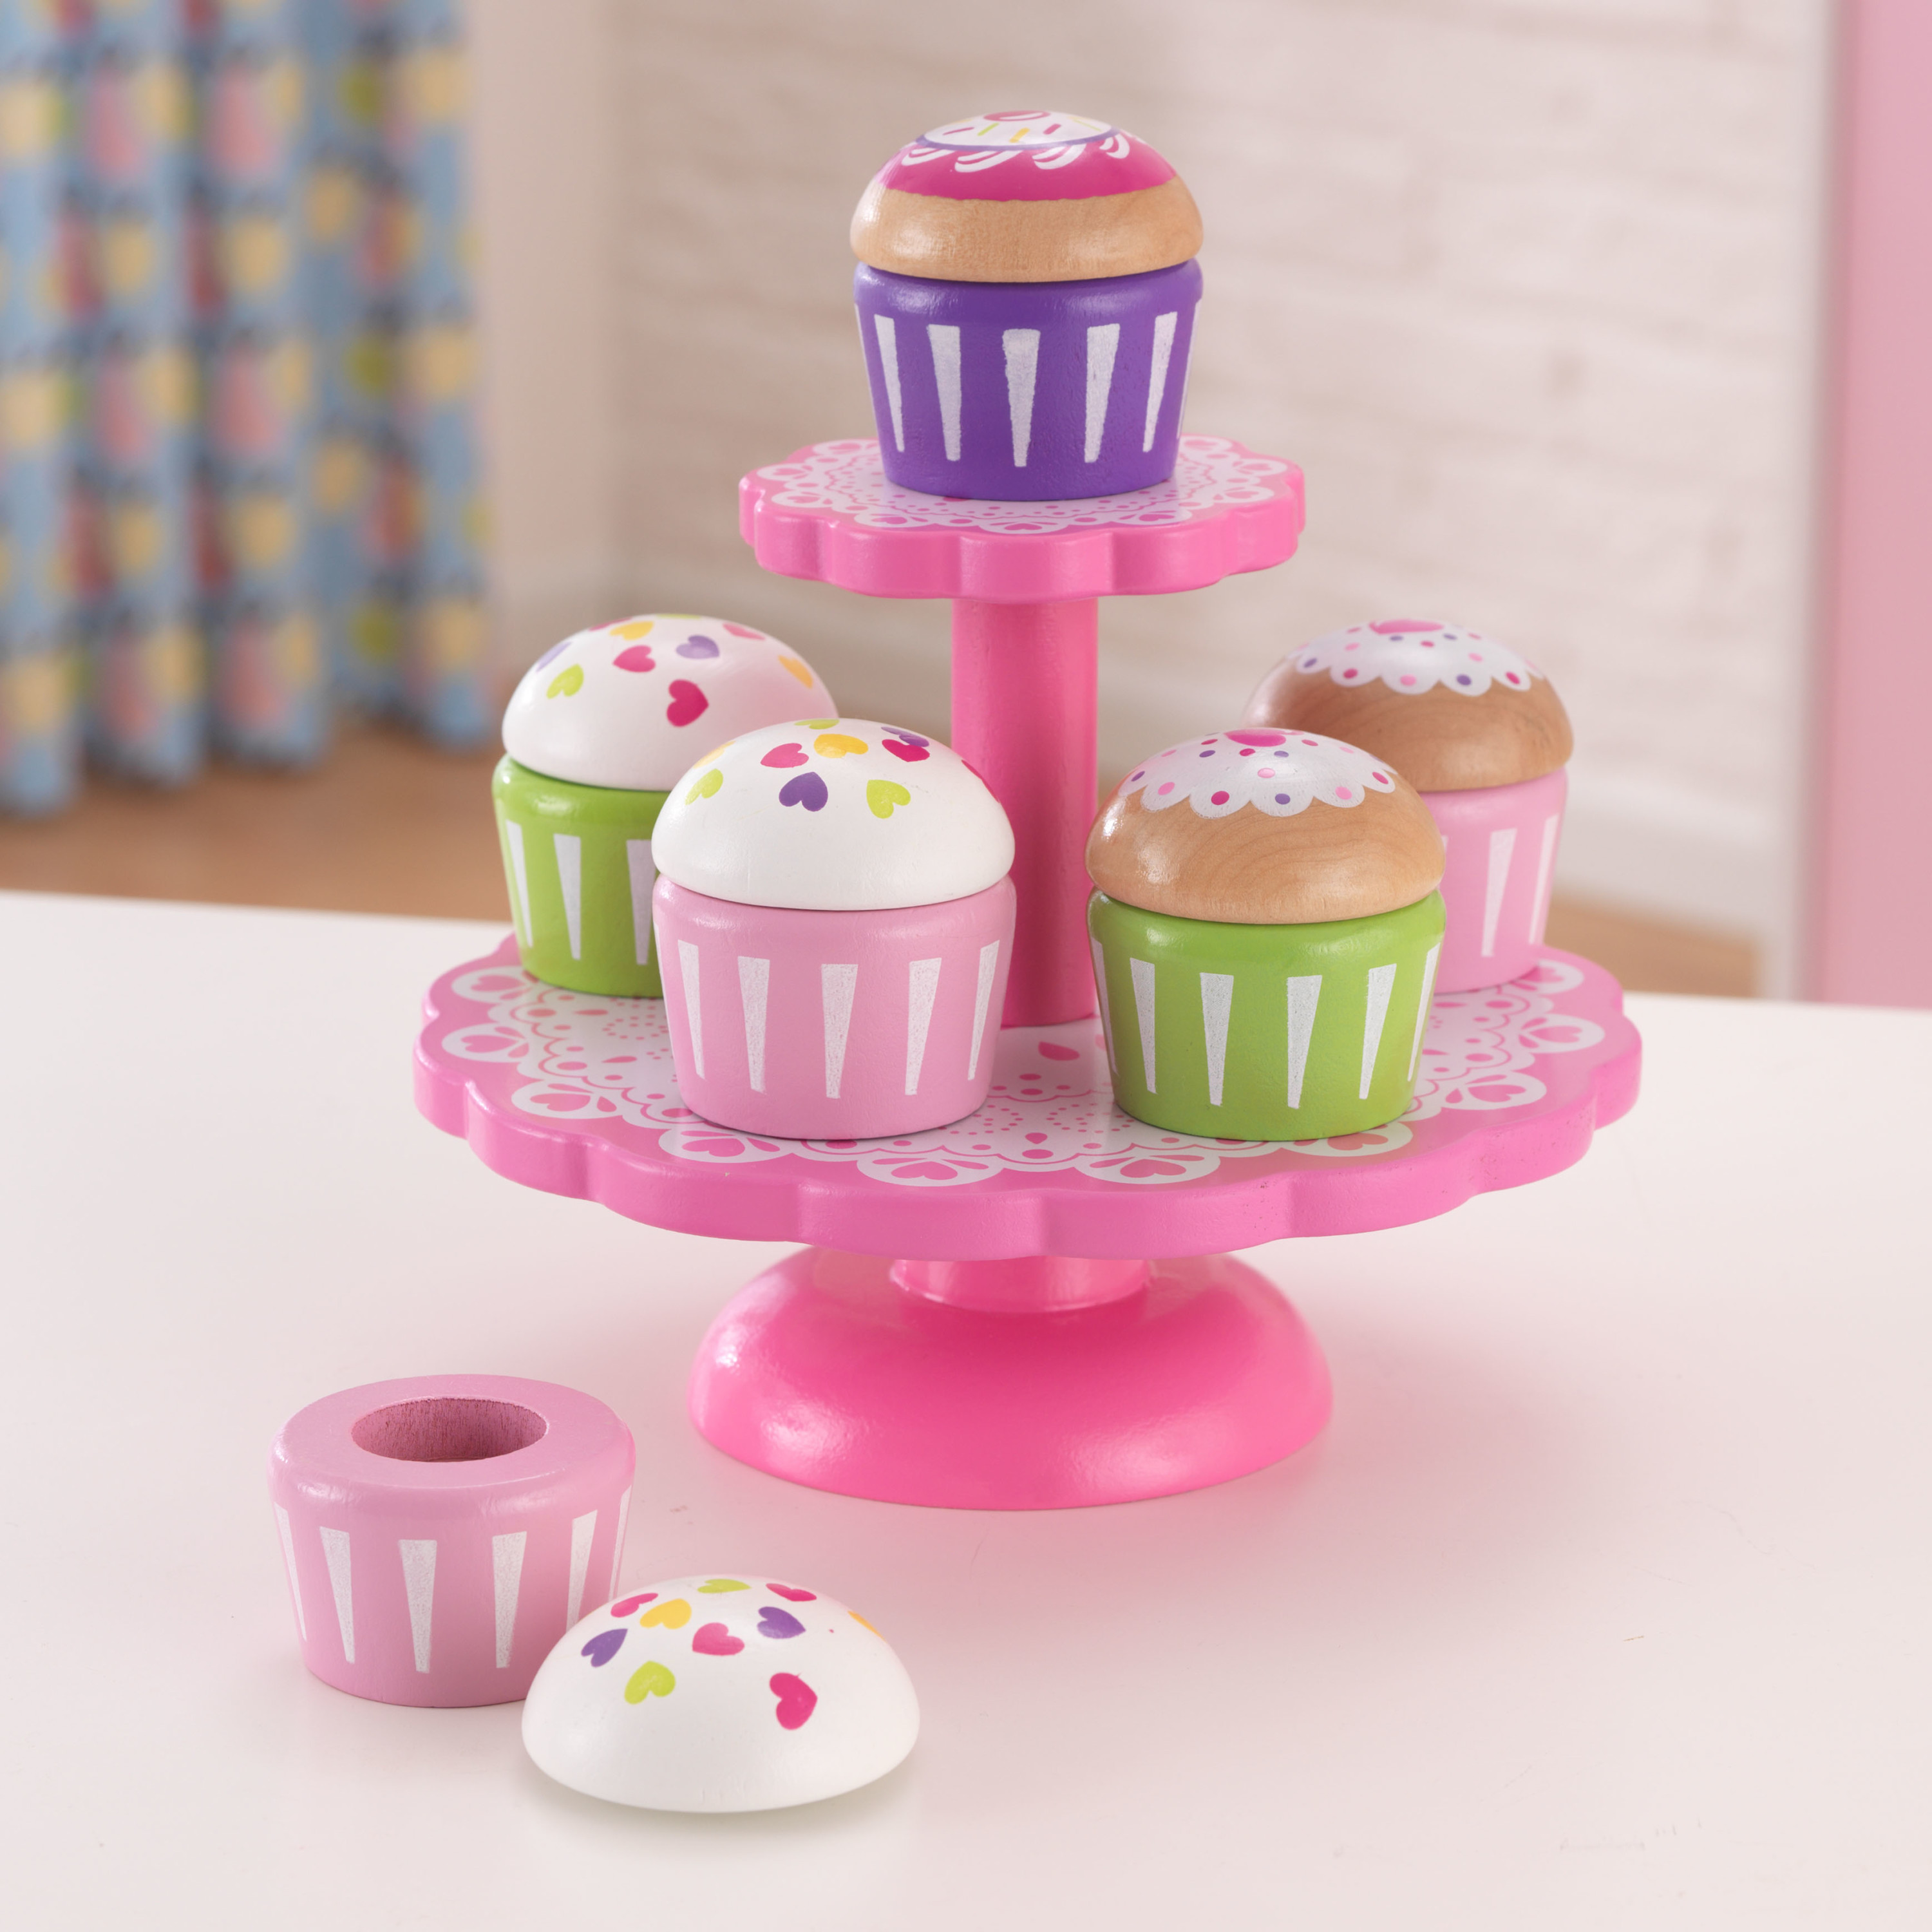 KidKraft Cupcake-Ständer mit Cupcakes - image 3 of 3